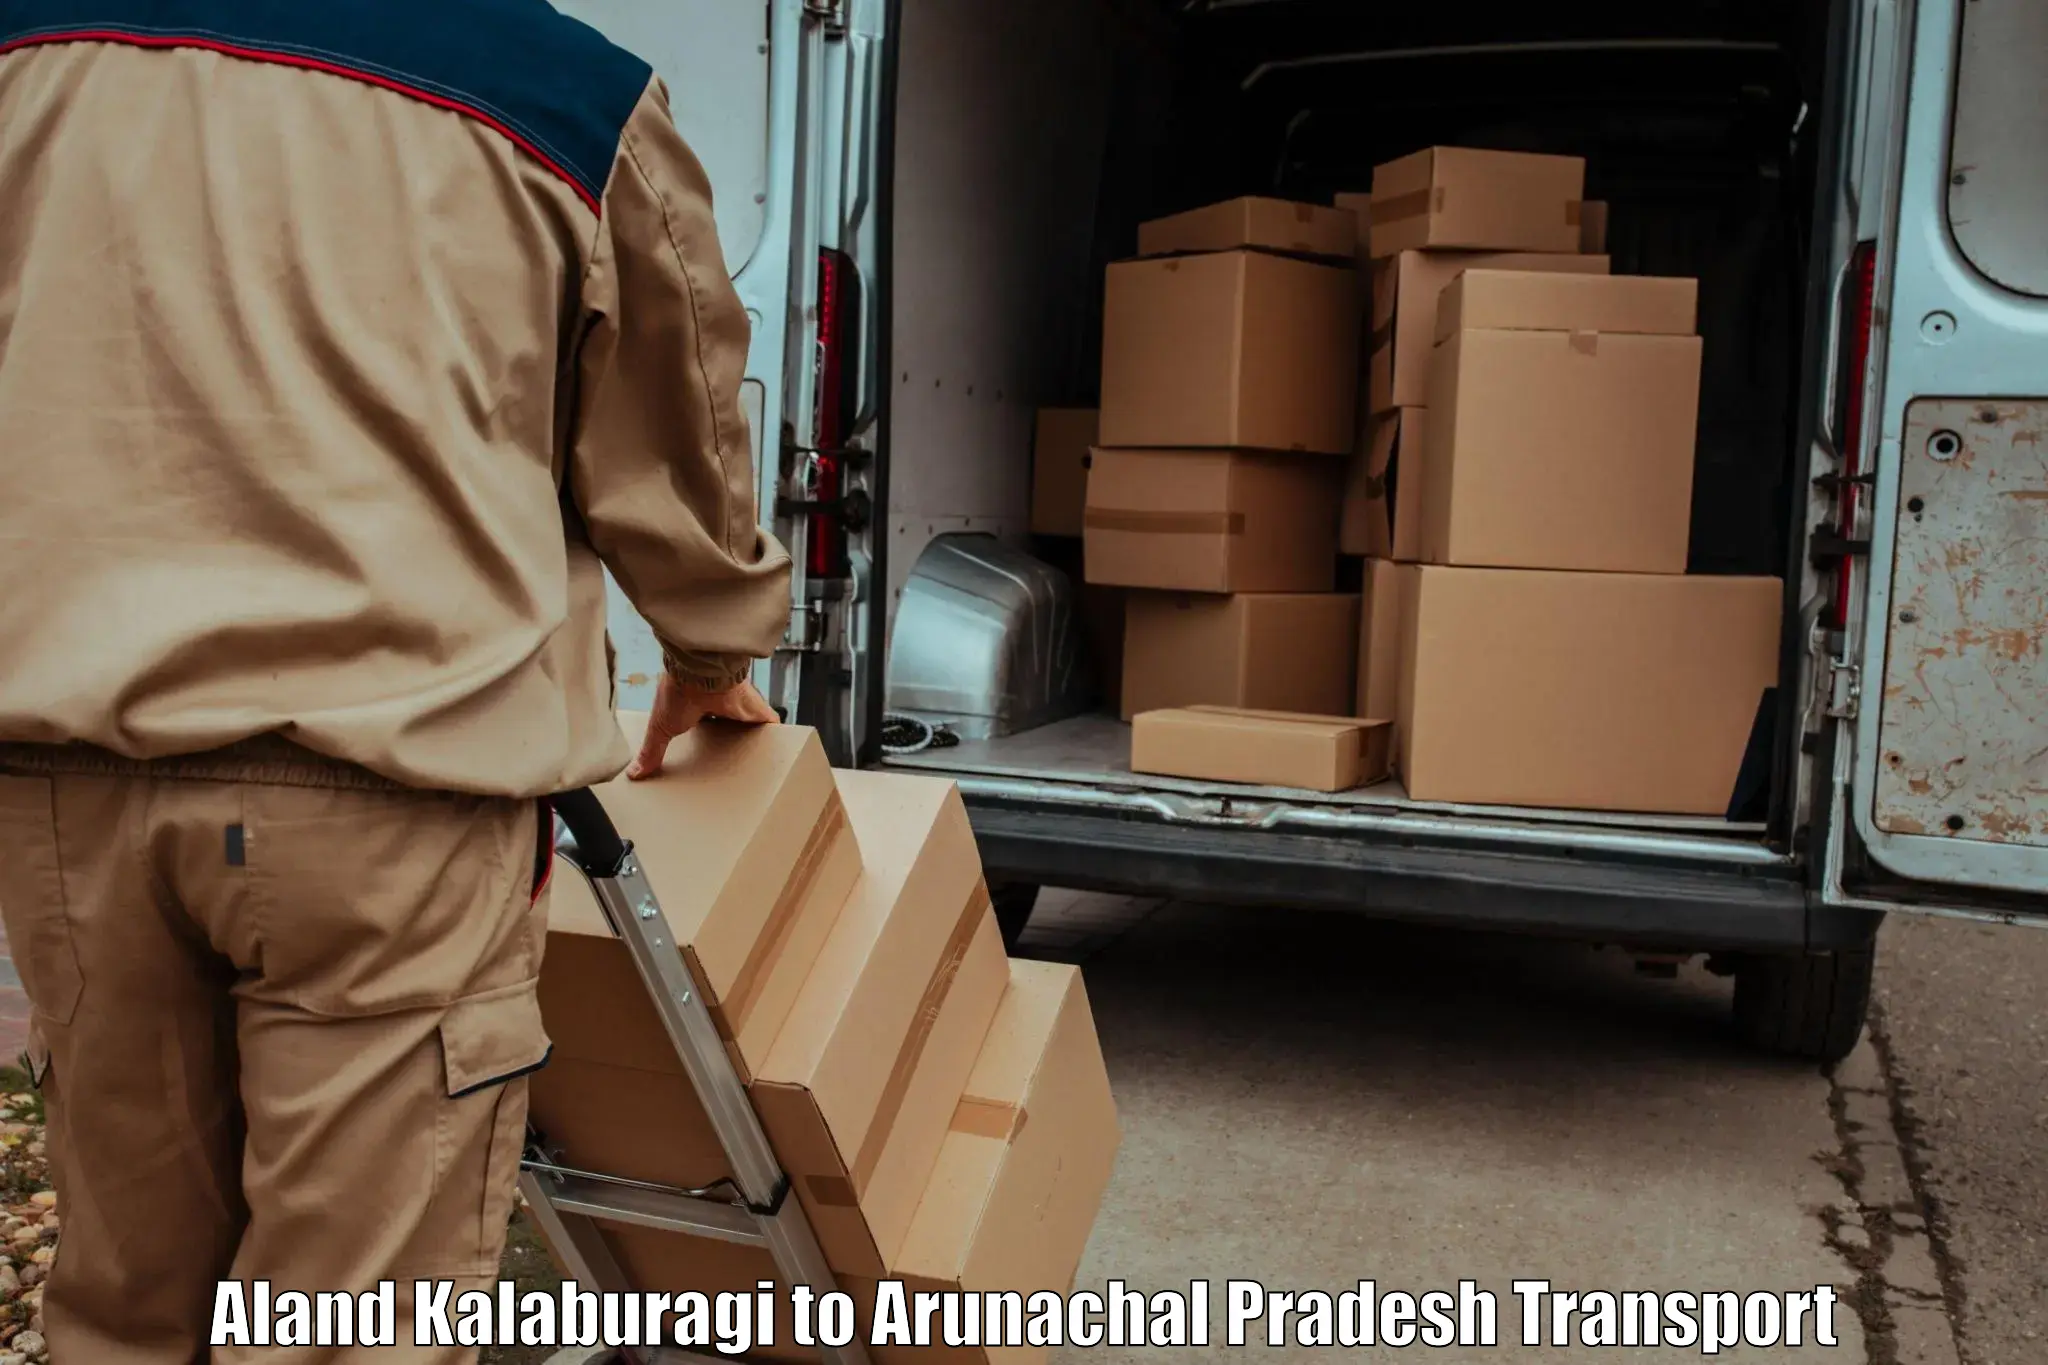 Delivery service Aland Kalaburagi to Upper Siang